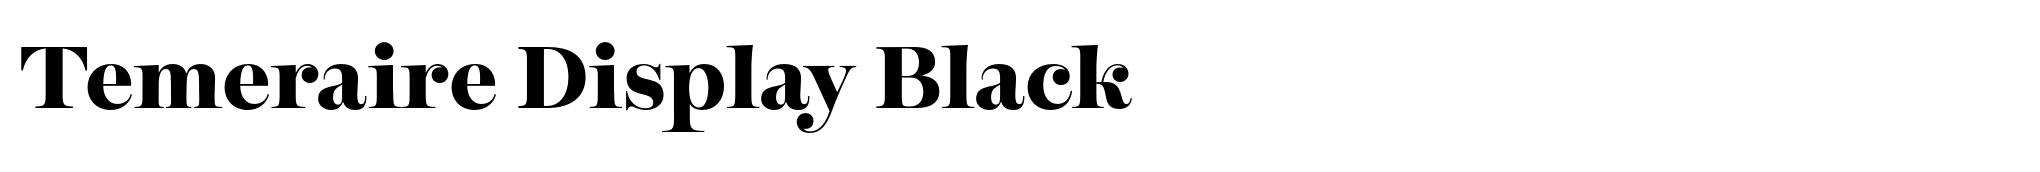 Temeraire Display Black image